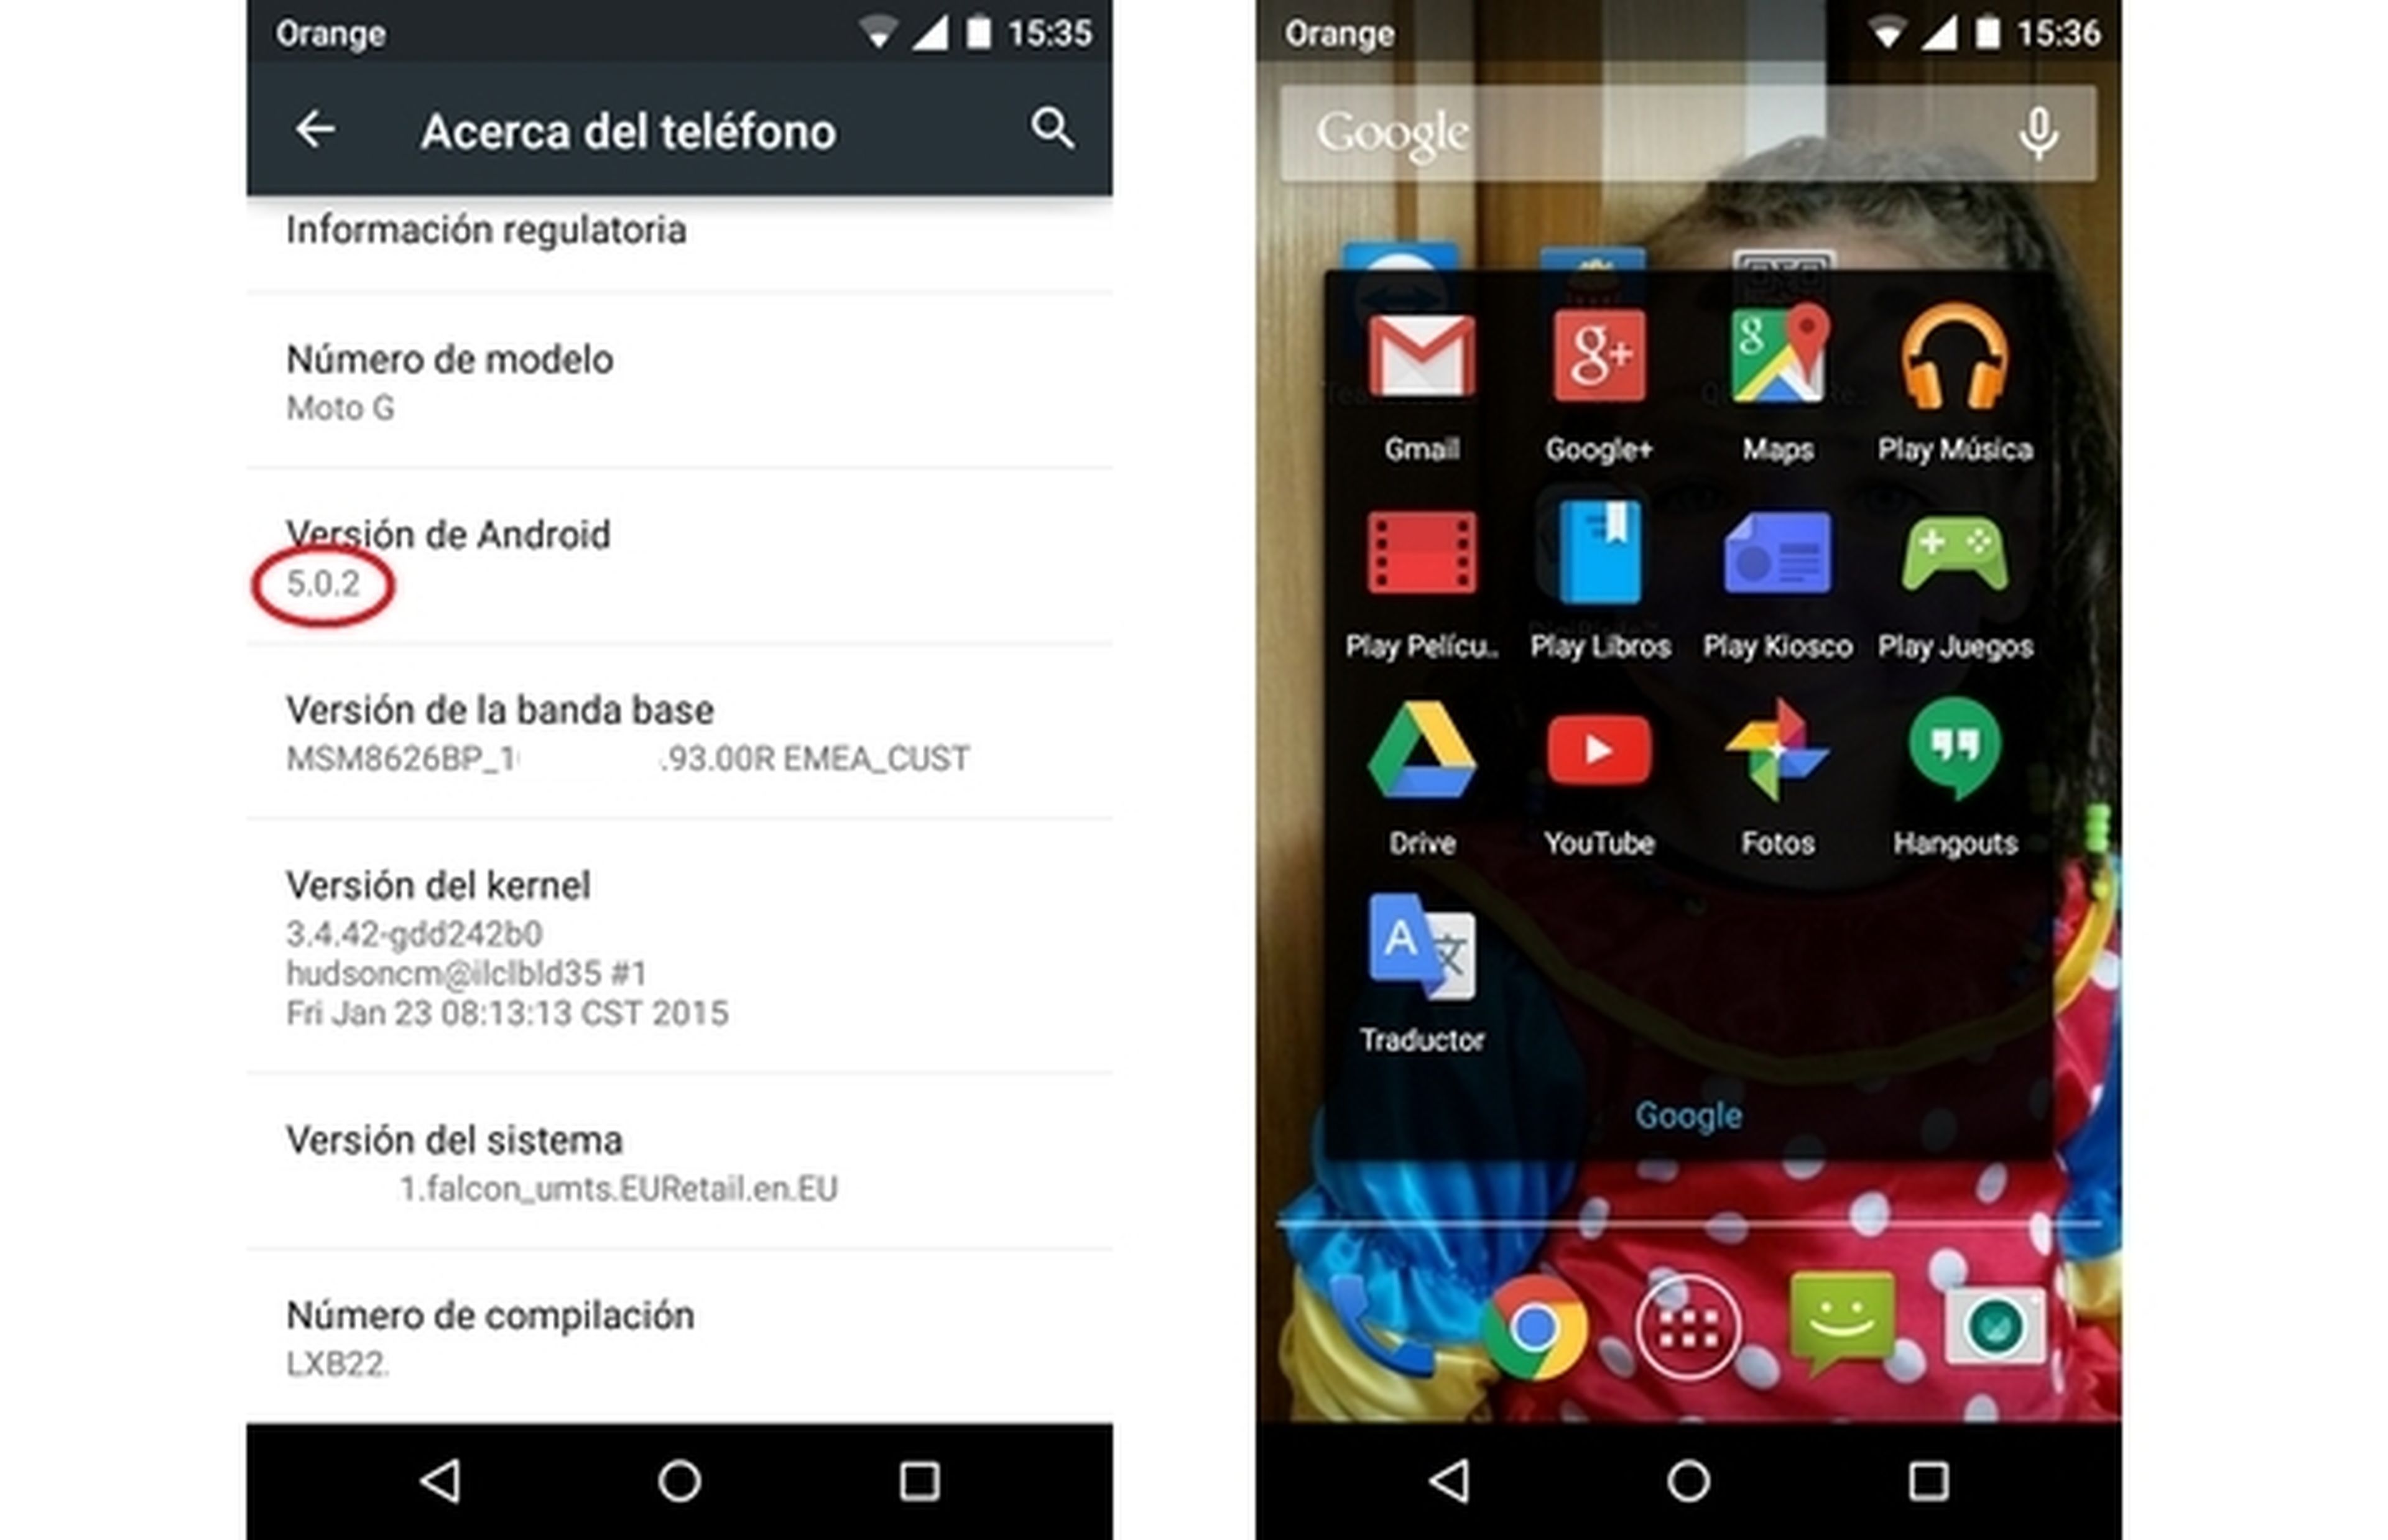 Moto G con Android 5.0.2 Lollipop